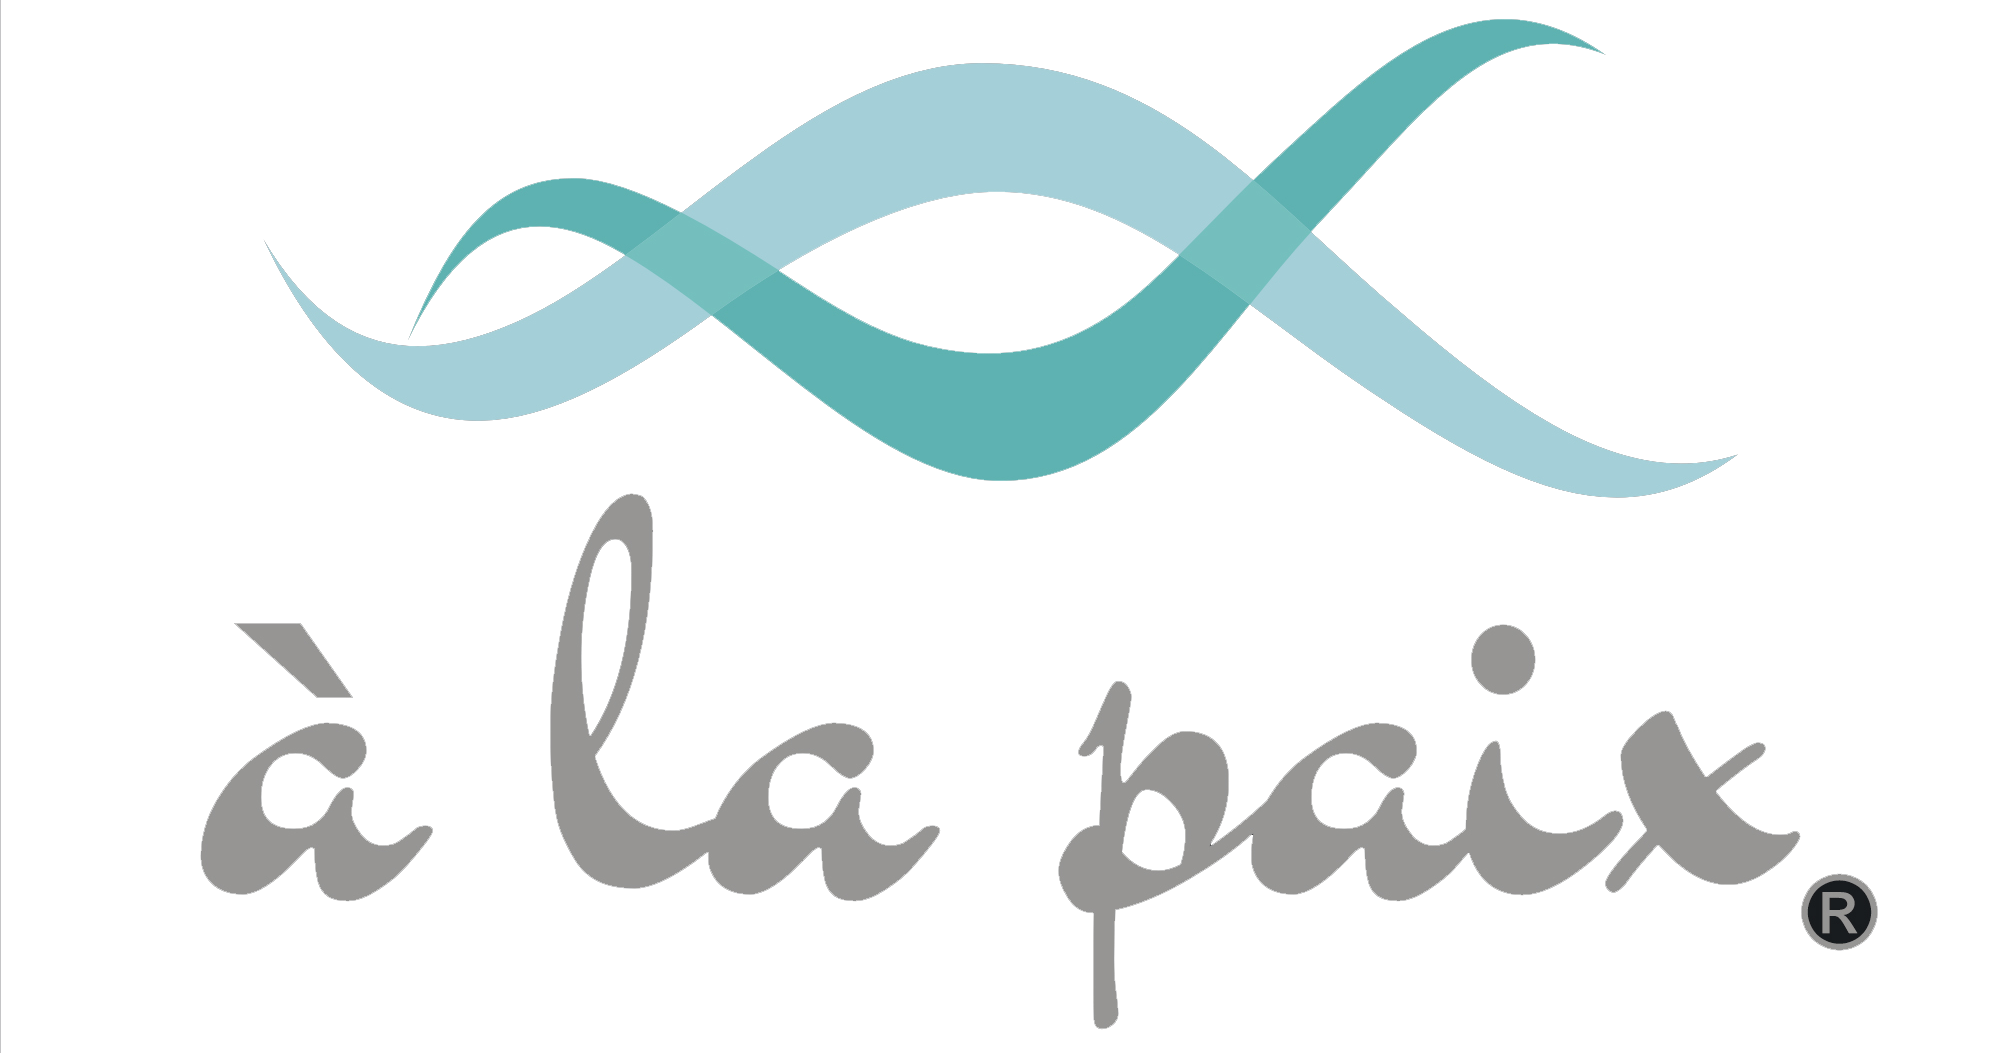 A La Paix logo